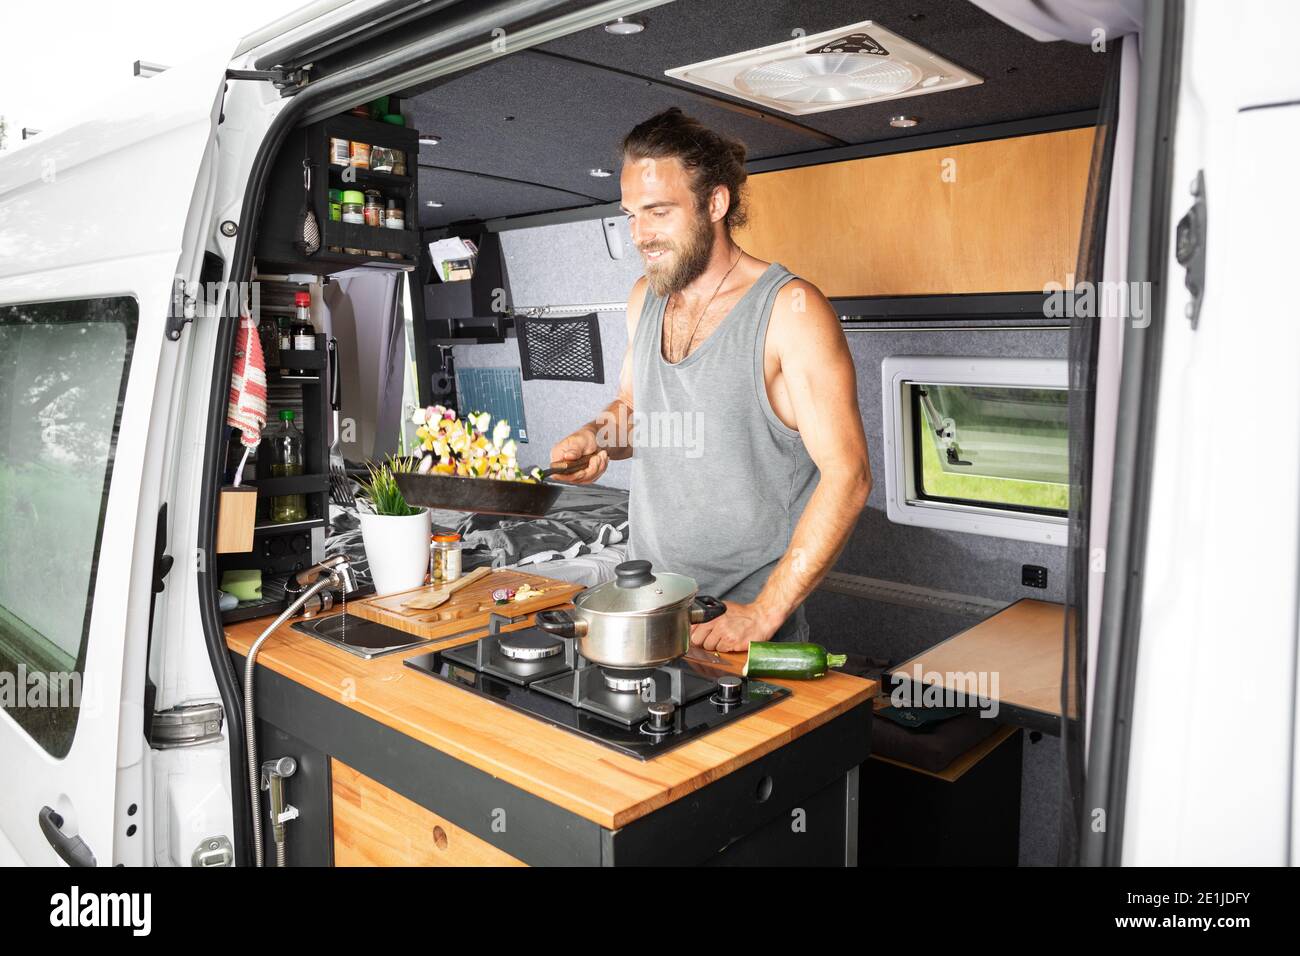 Smiling man cooking inside his camper van Stock Photo